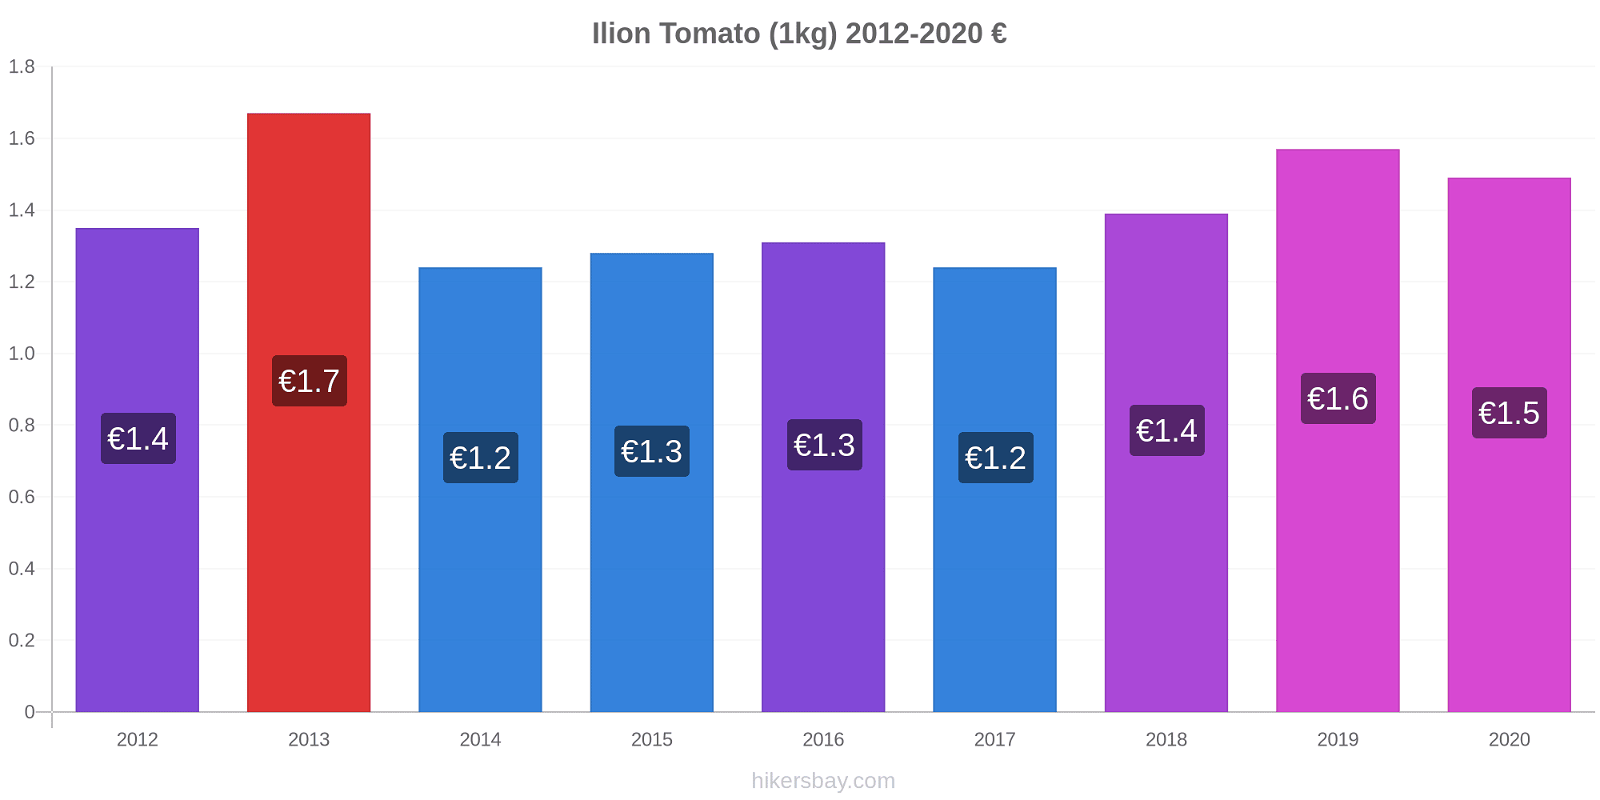 Ilion price changes Tomato (1kg) hikersbay.com